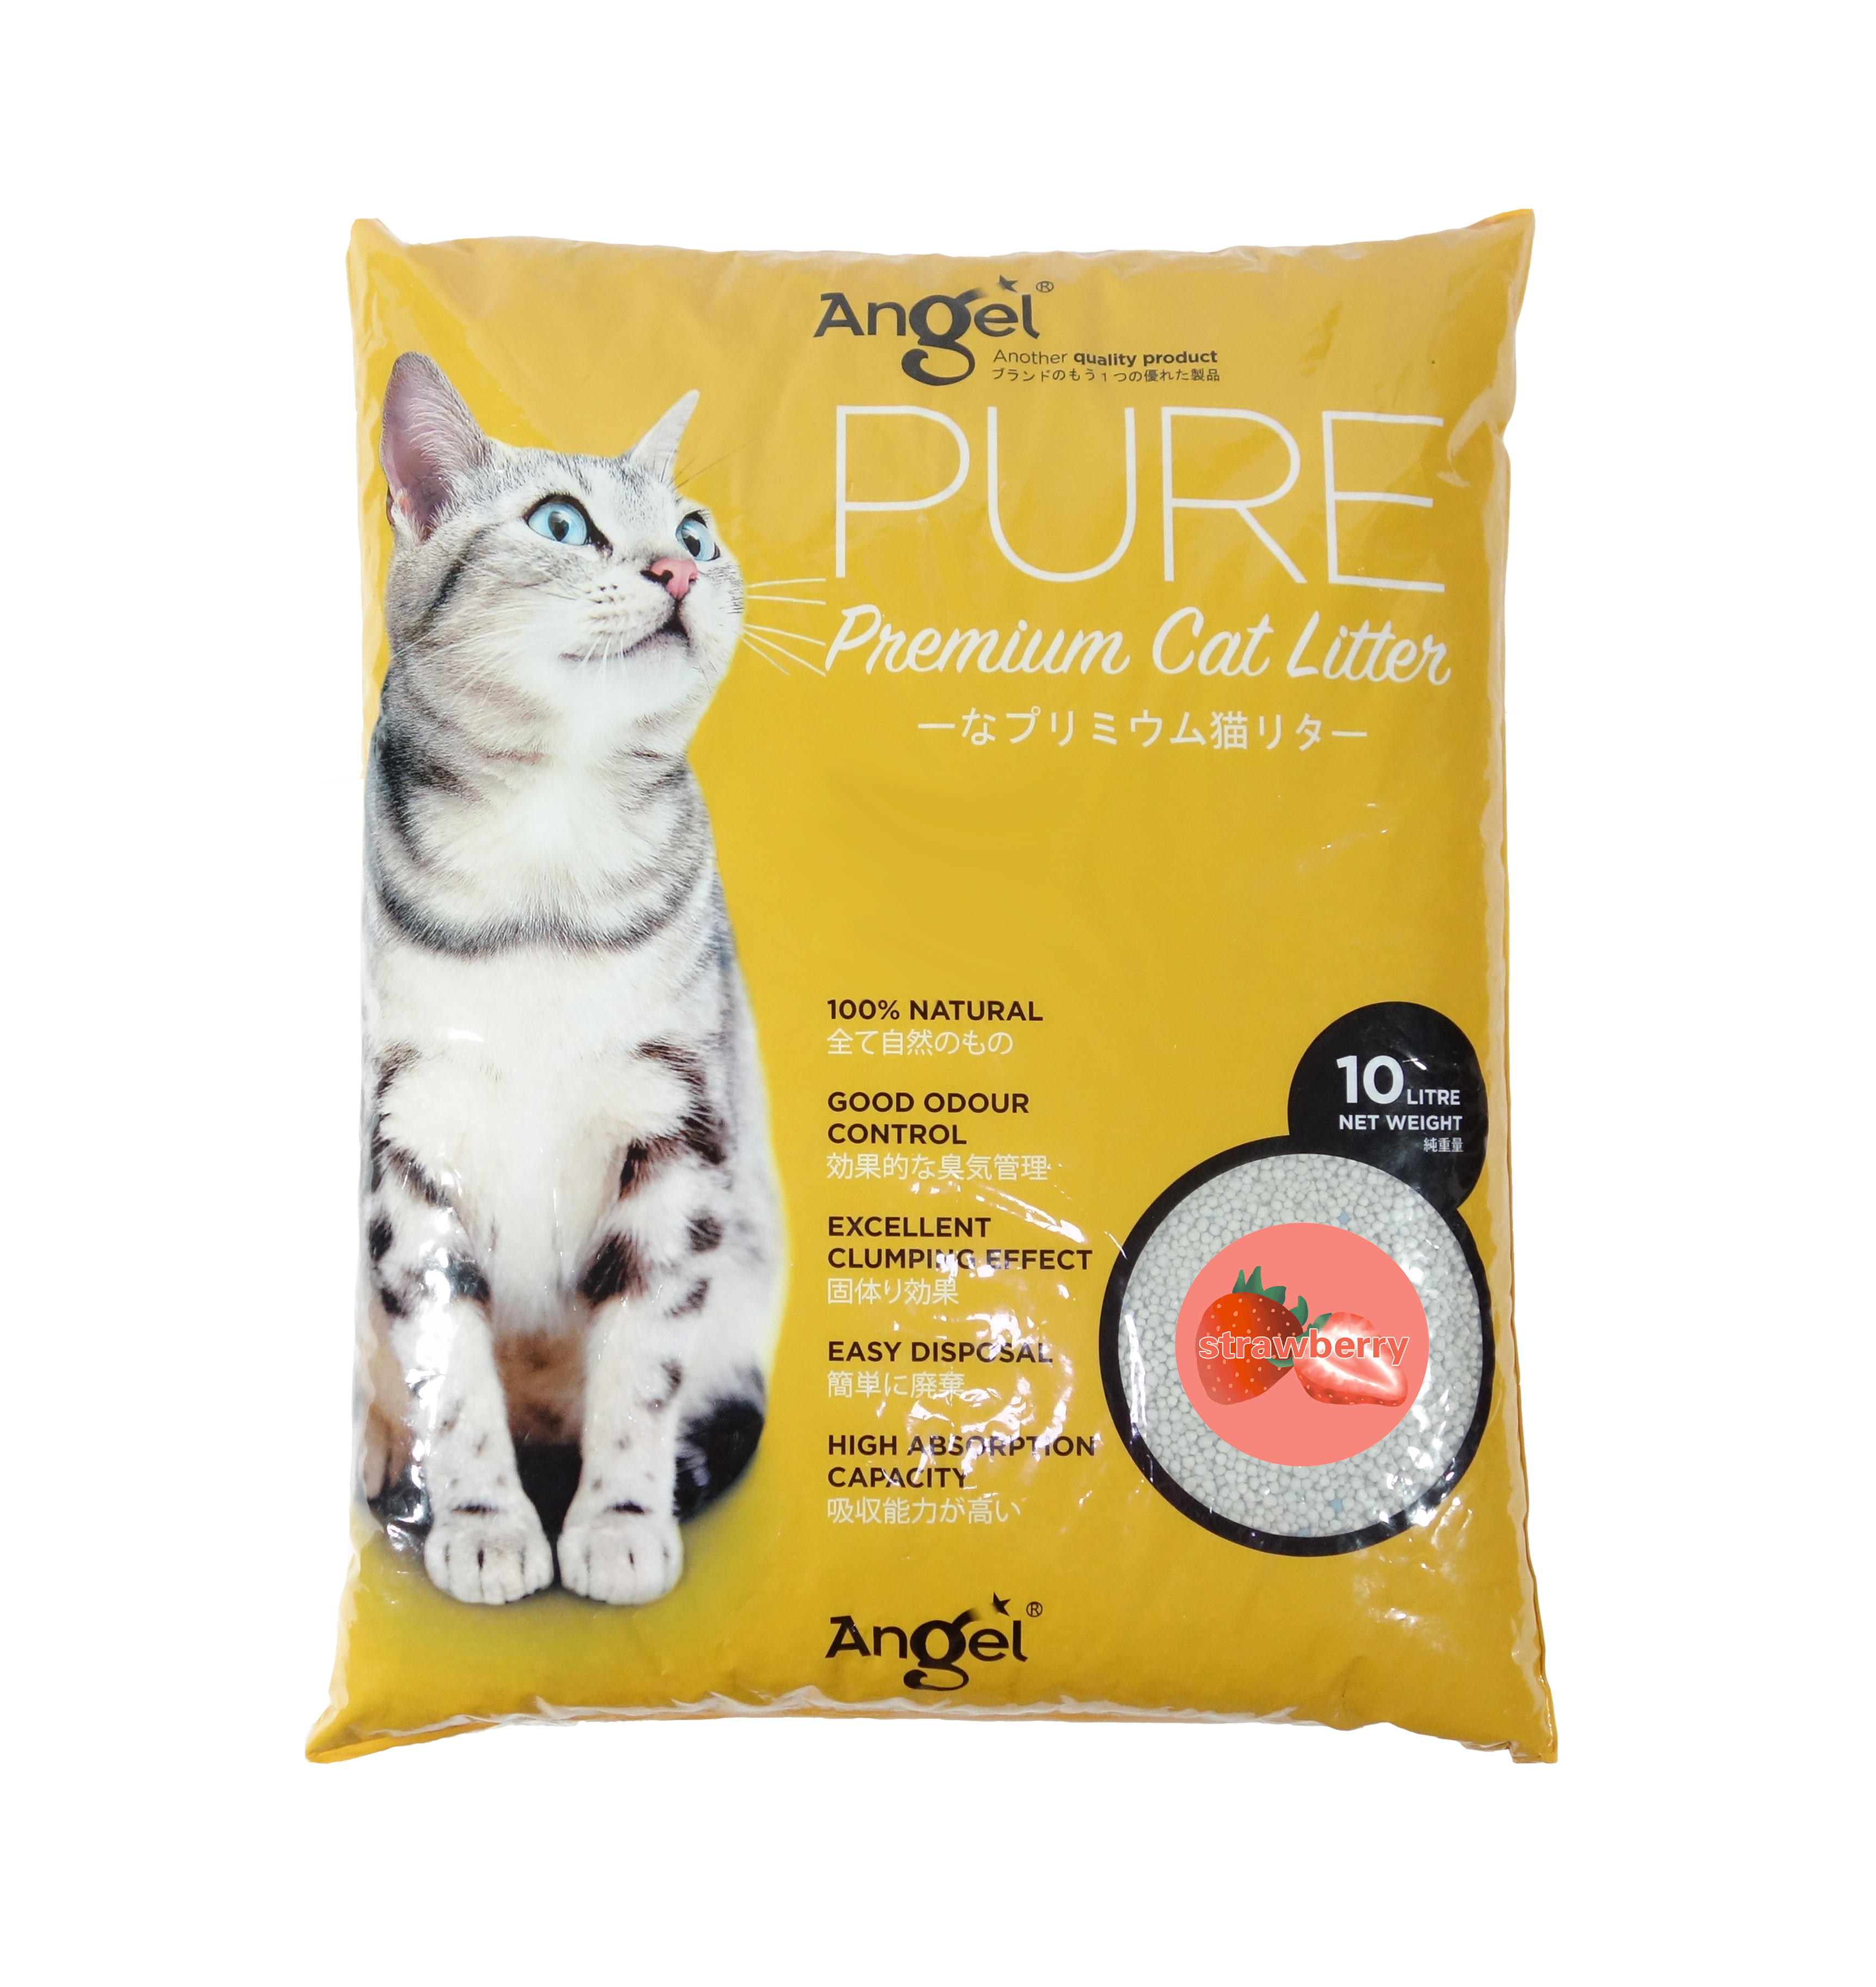 Angel Pure Premium Cat Litter 10L Strawberry Scented